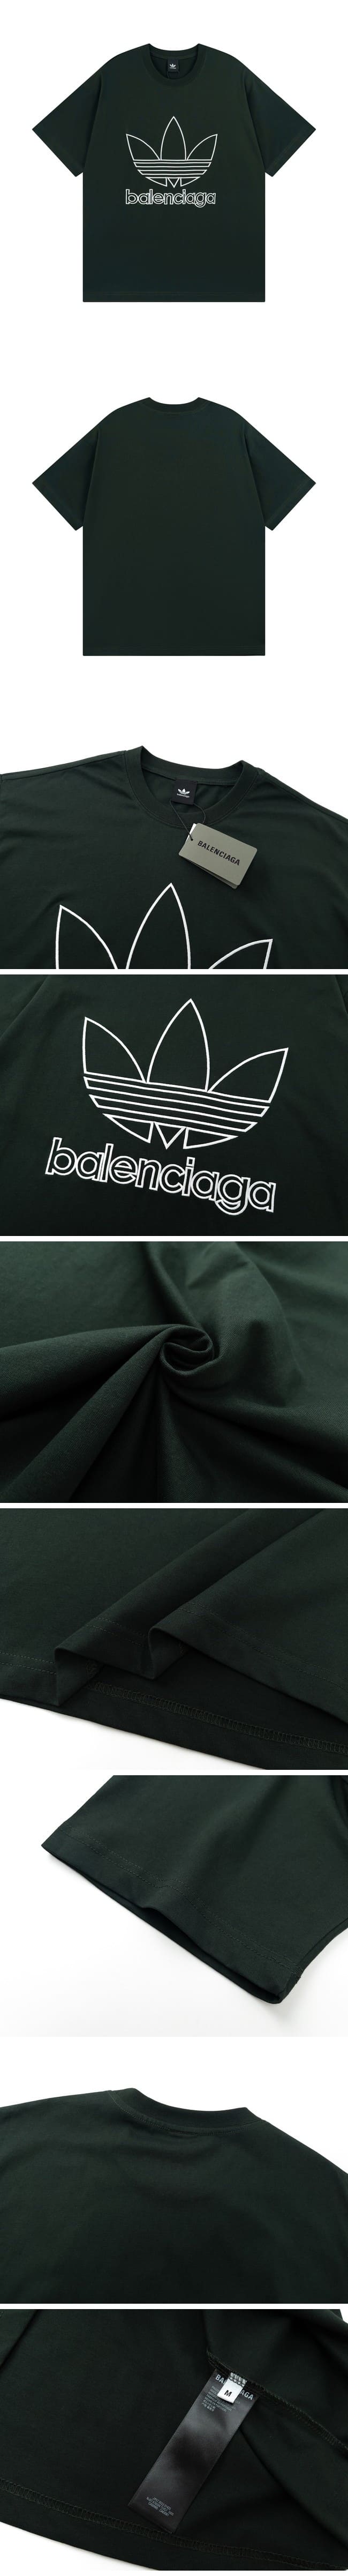 Balenciaga x Adidas Oversized Tee DarkGreen バレンシアガ x アディダス オーバーサイズ Tシャツ ダークグリーン